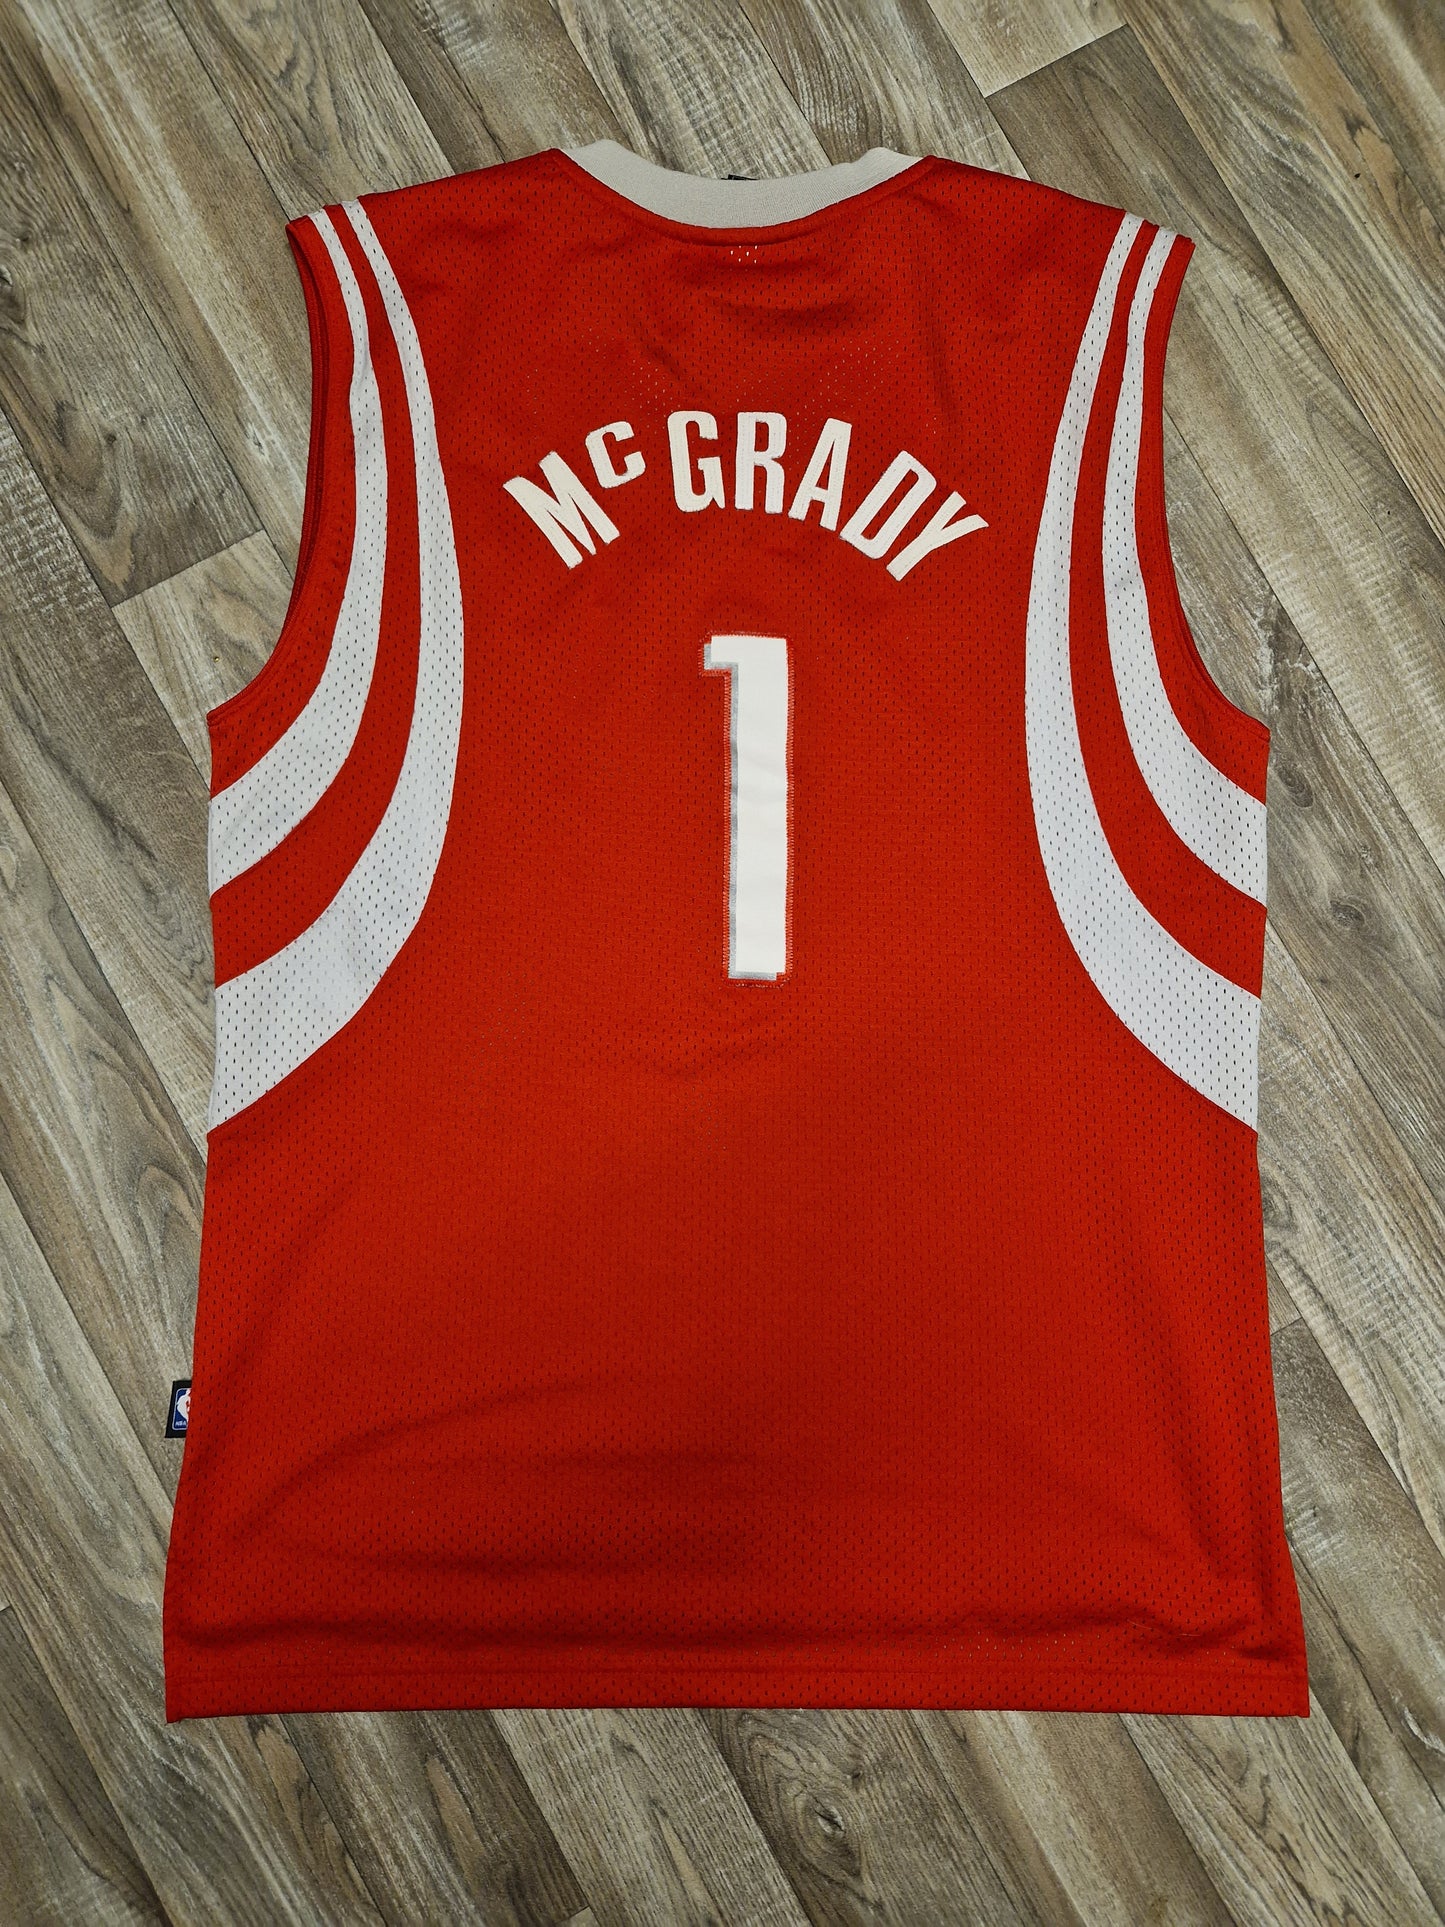 Tracy McGrady Houston Rockets Jersey Size Large